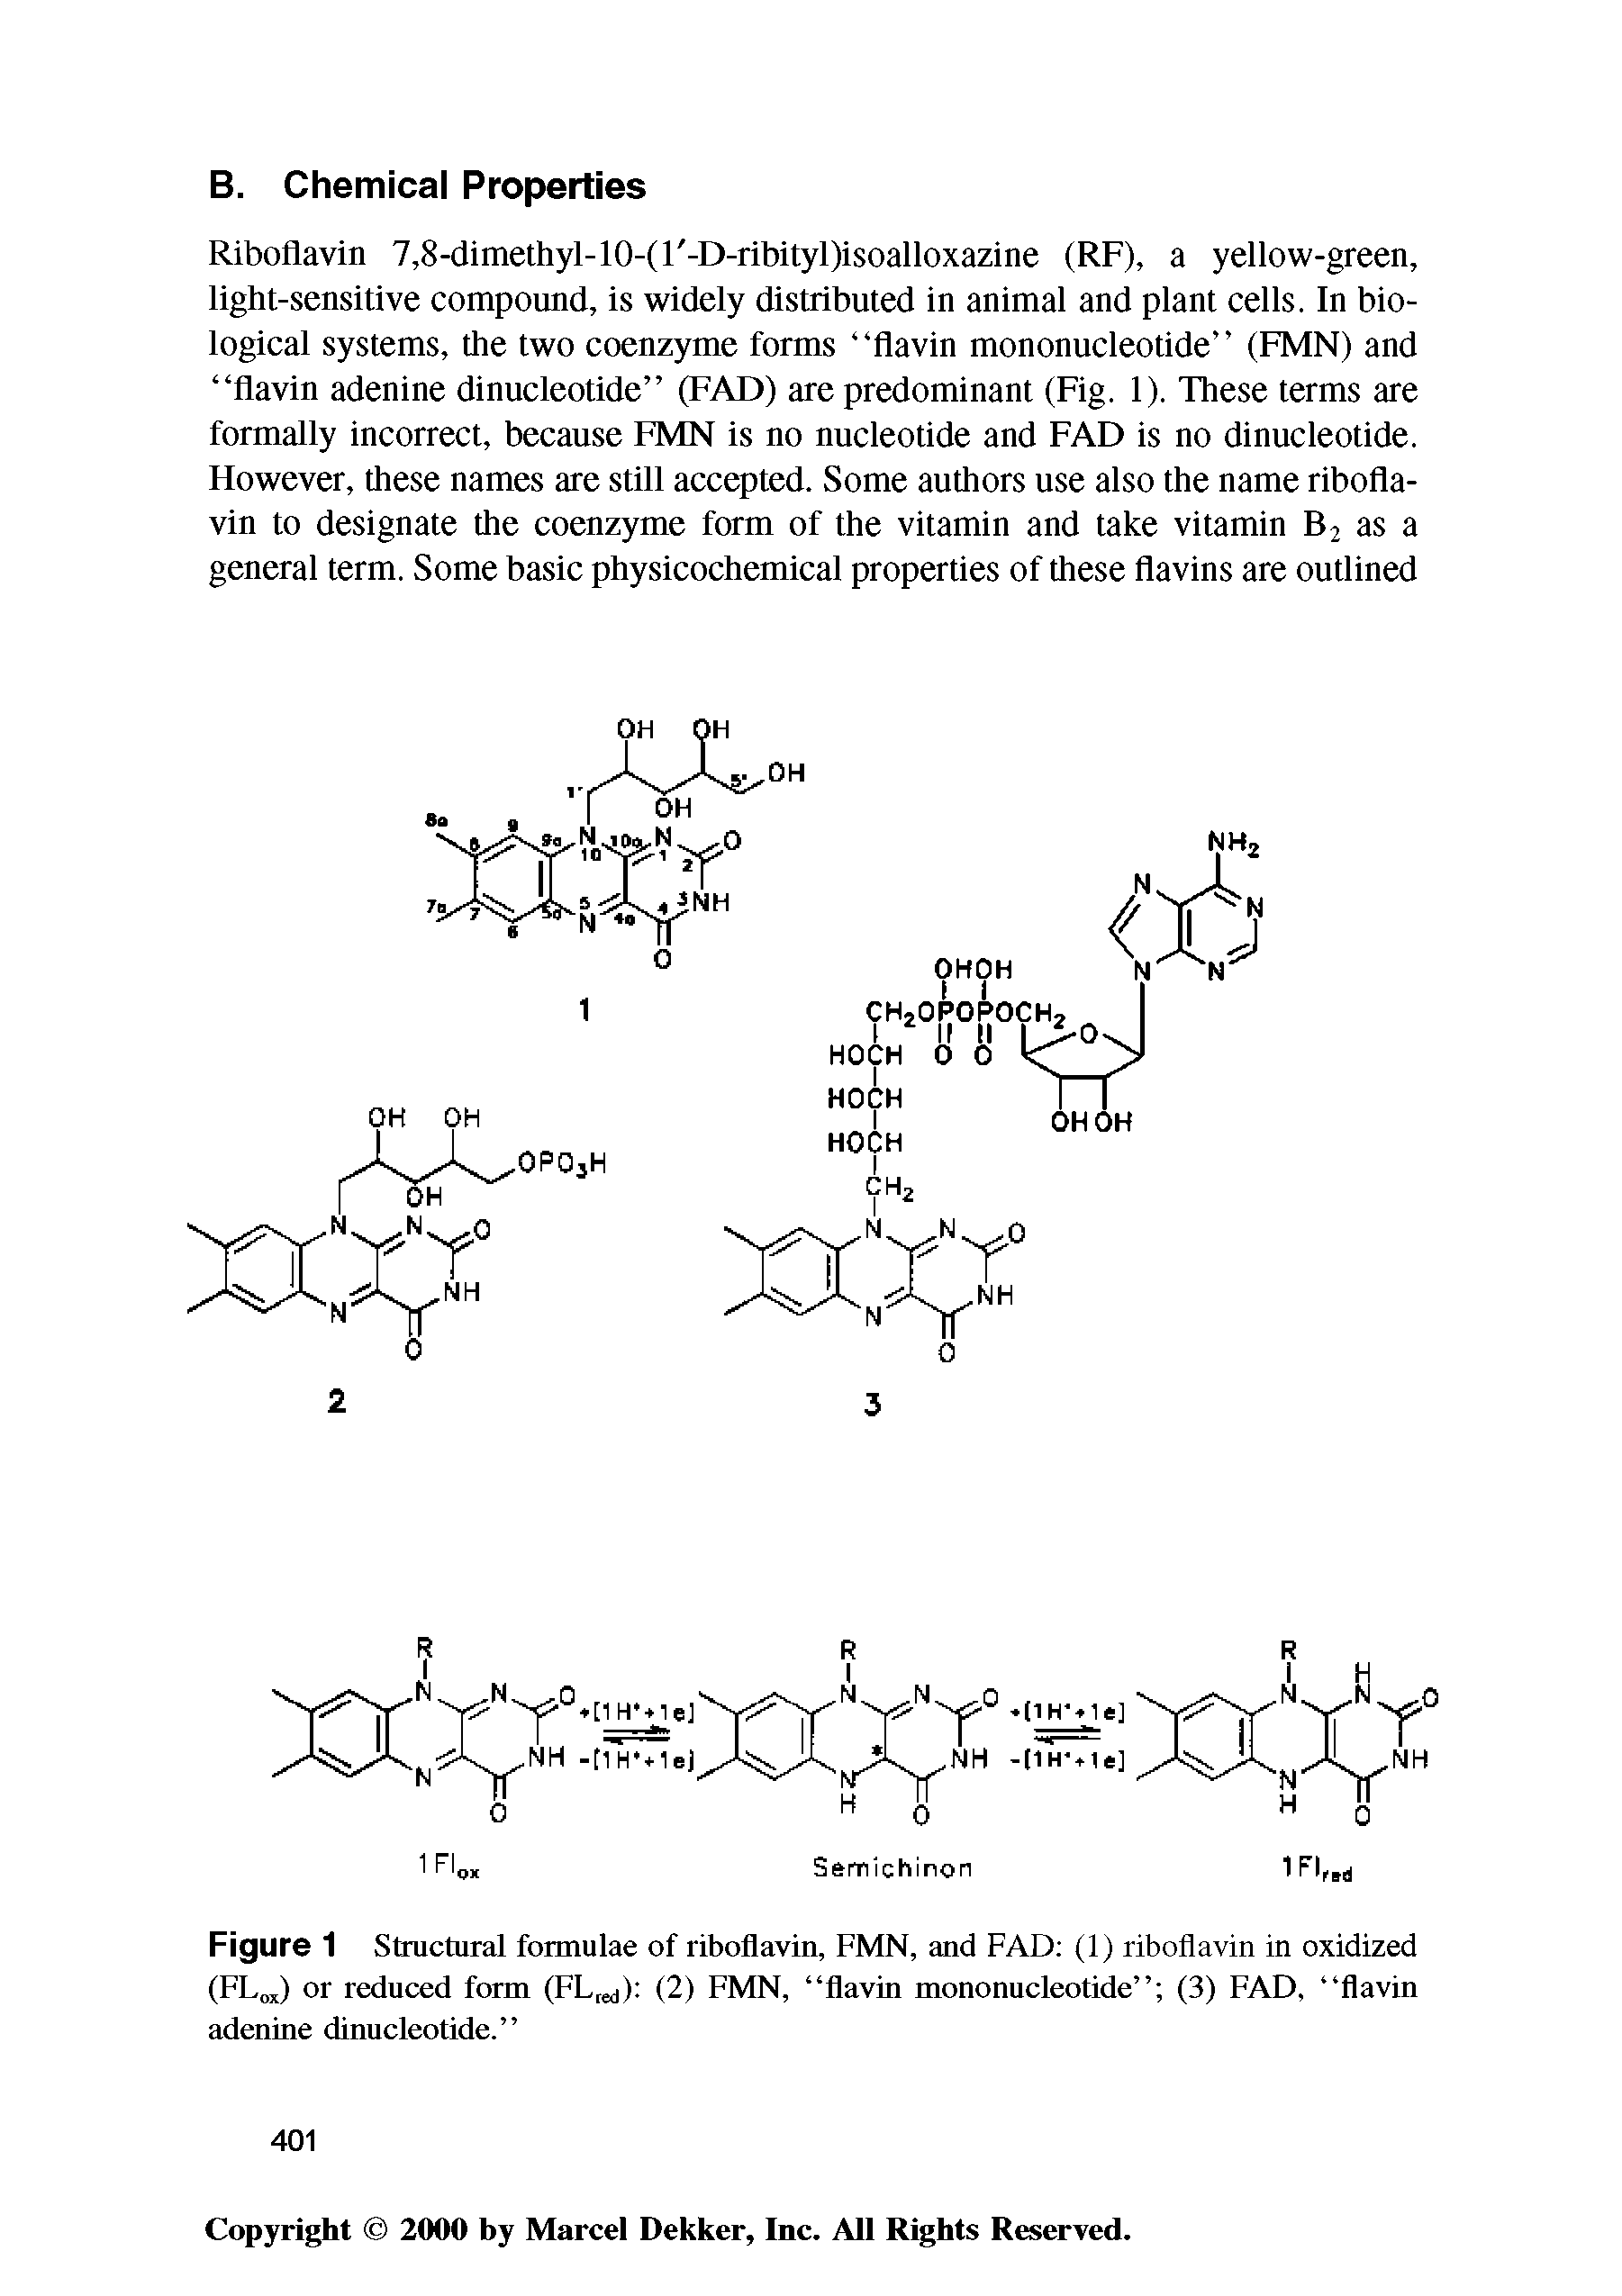 Figure 1 Structural formulae of riboflavin, FMN, and FAD (1) riboflavin in oxidized (FL j) or reduced form (FL, ) (2) FMN, flavin mononucleotide (3) FAD, flavin adenine dinucleotide. ...